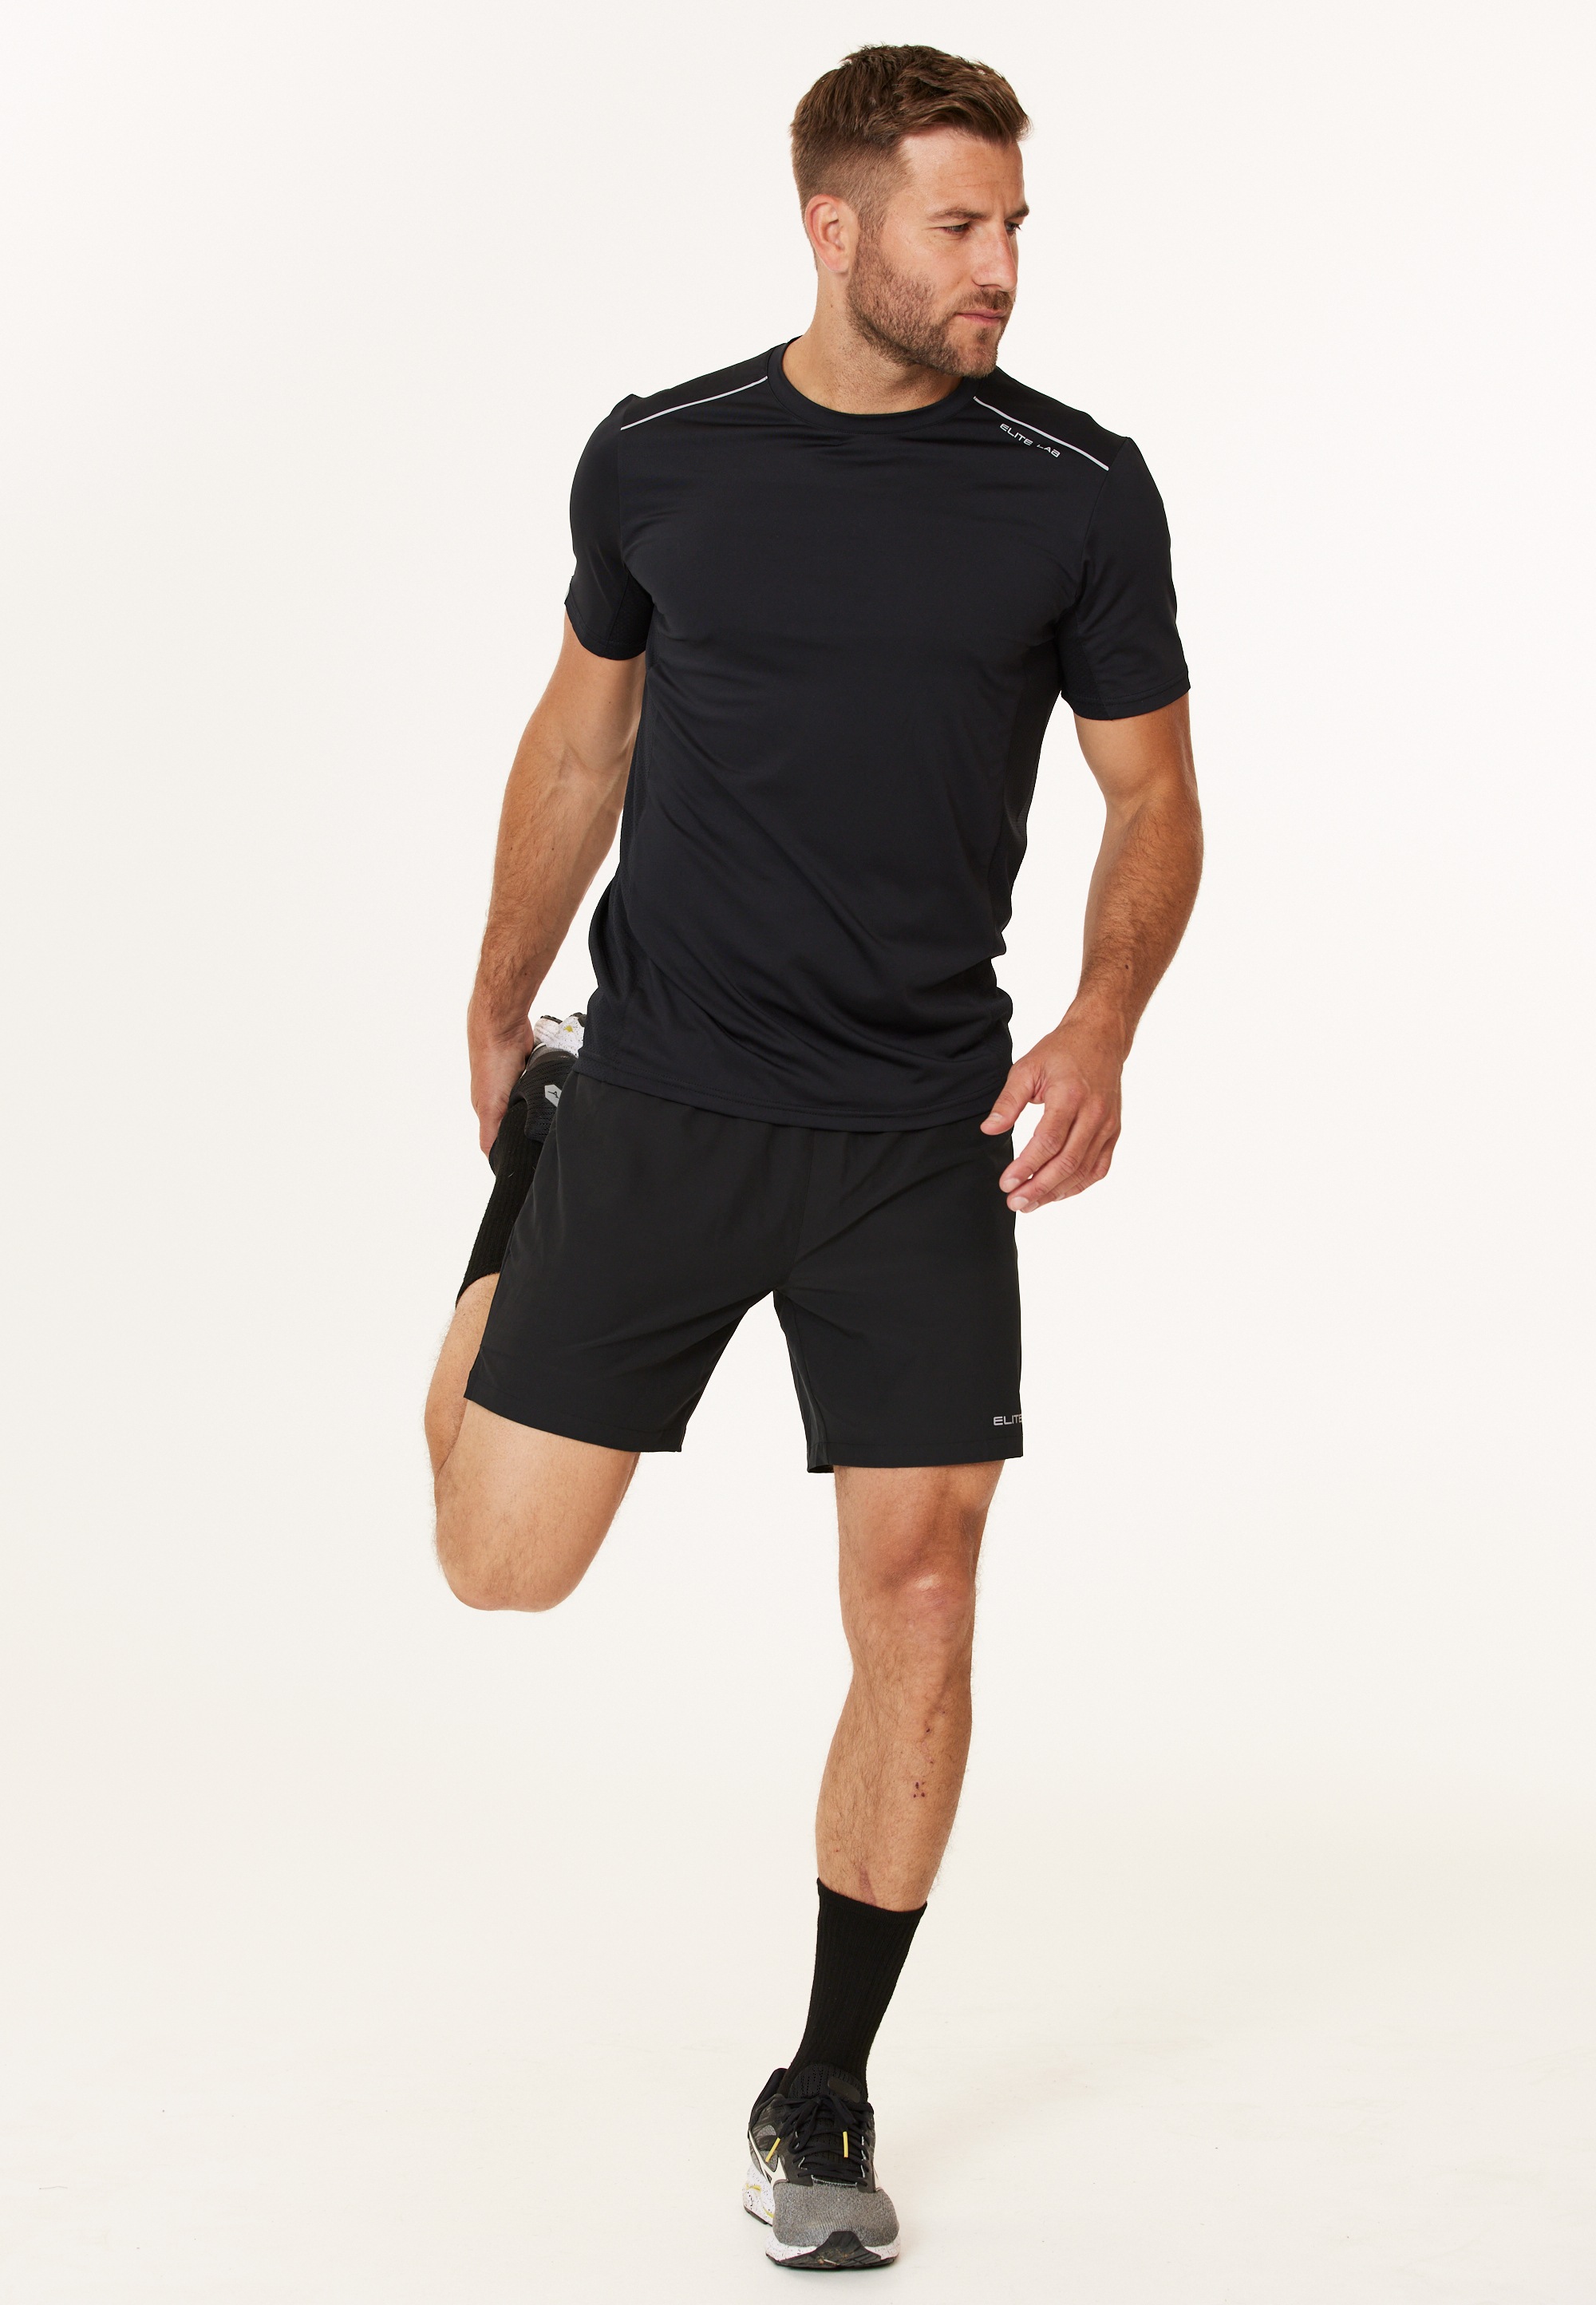 Shorts »Run«, mit funktionaler Quick-Dry-Technologie